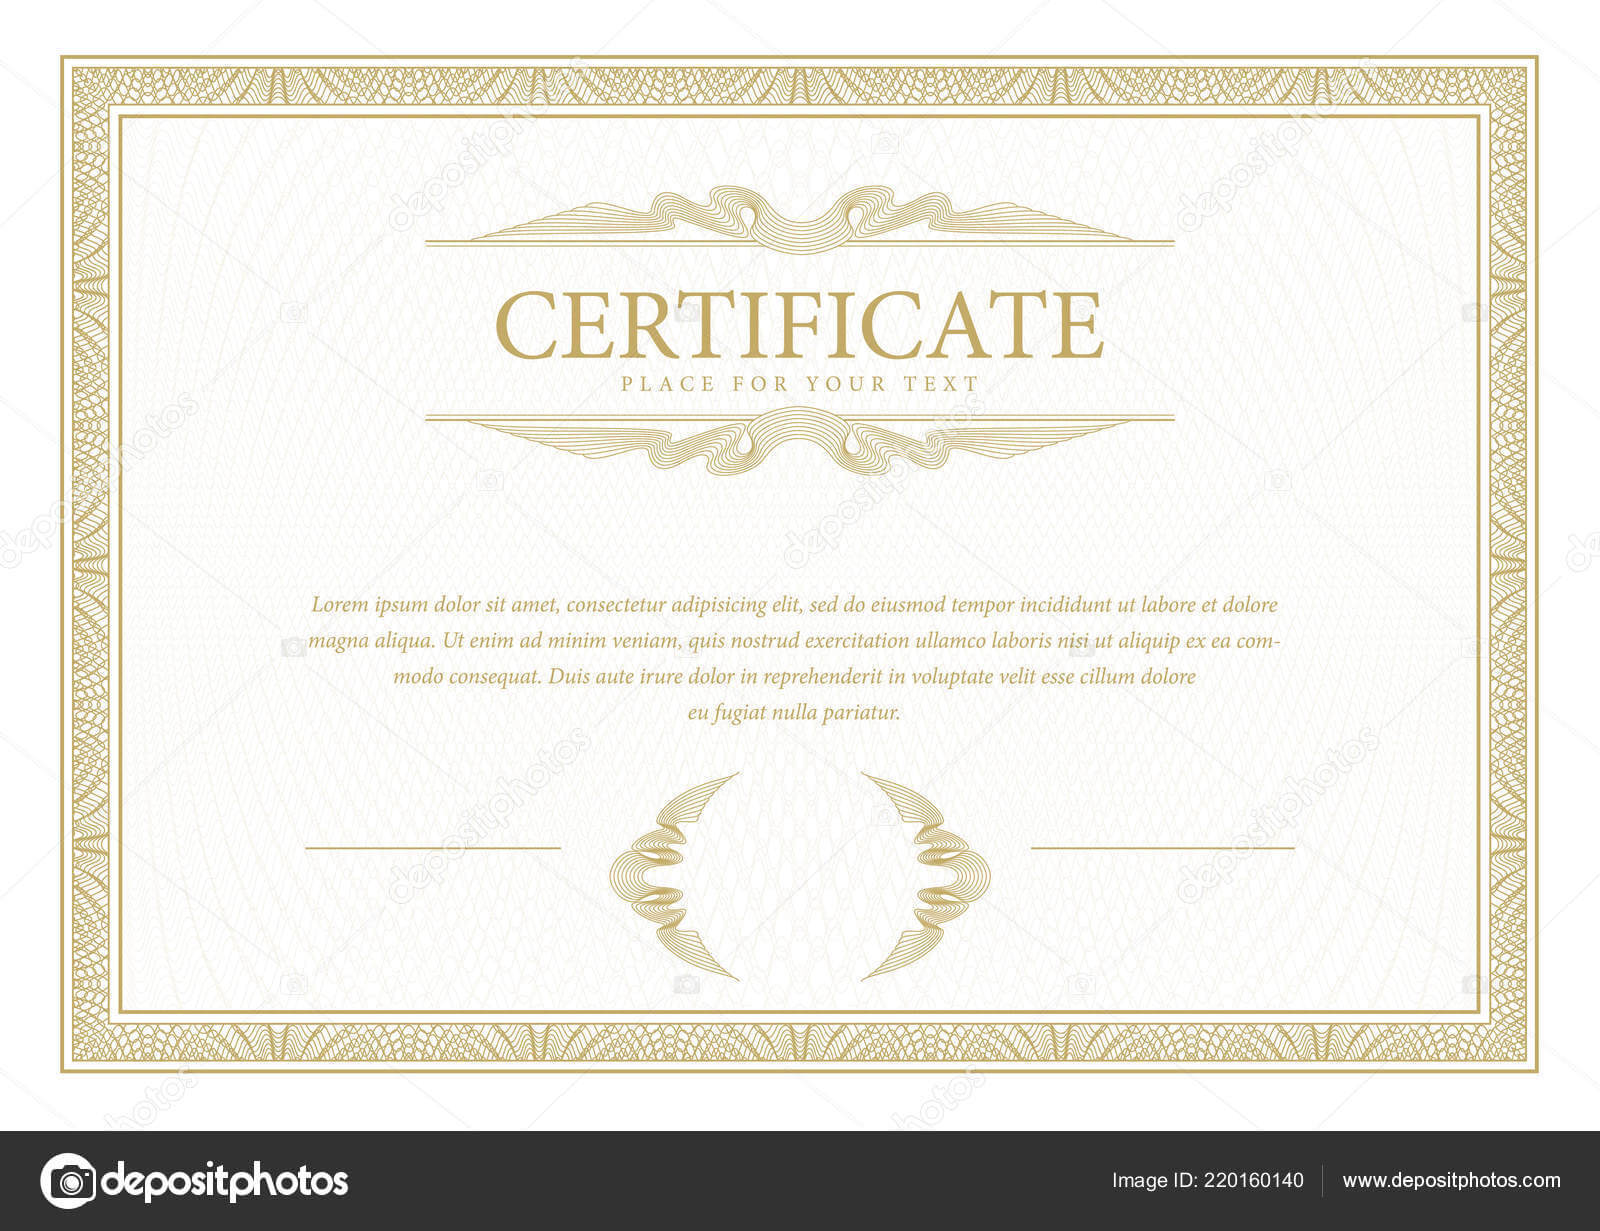 Certificate Template Diploma Currency Border Award In Commemorative Certificate Template